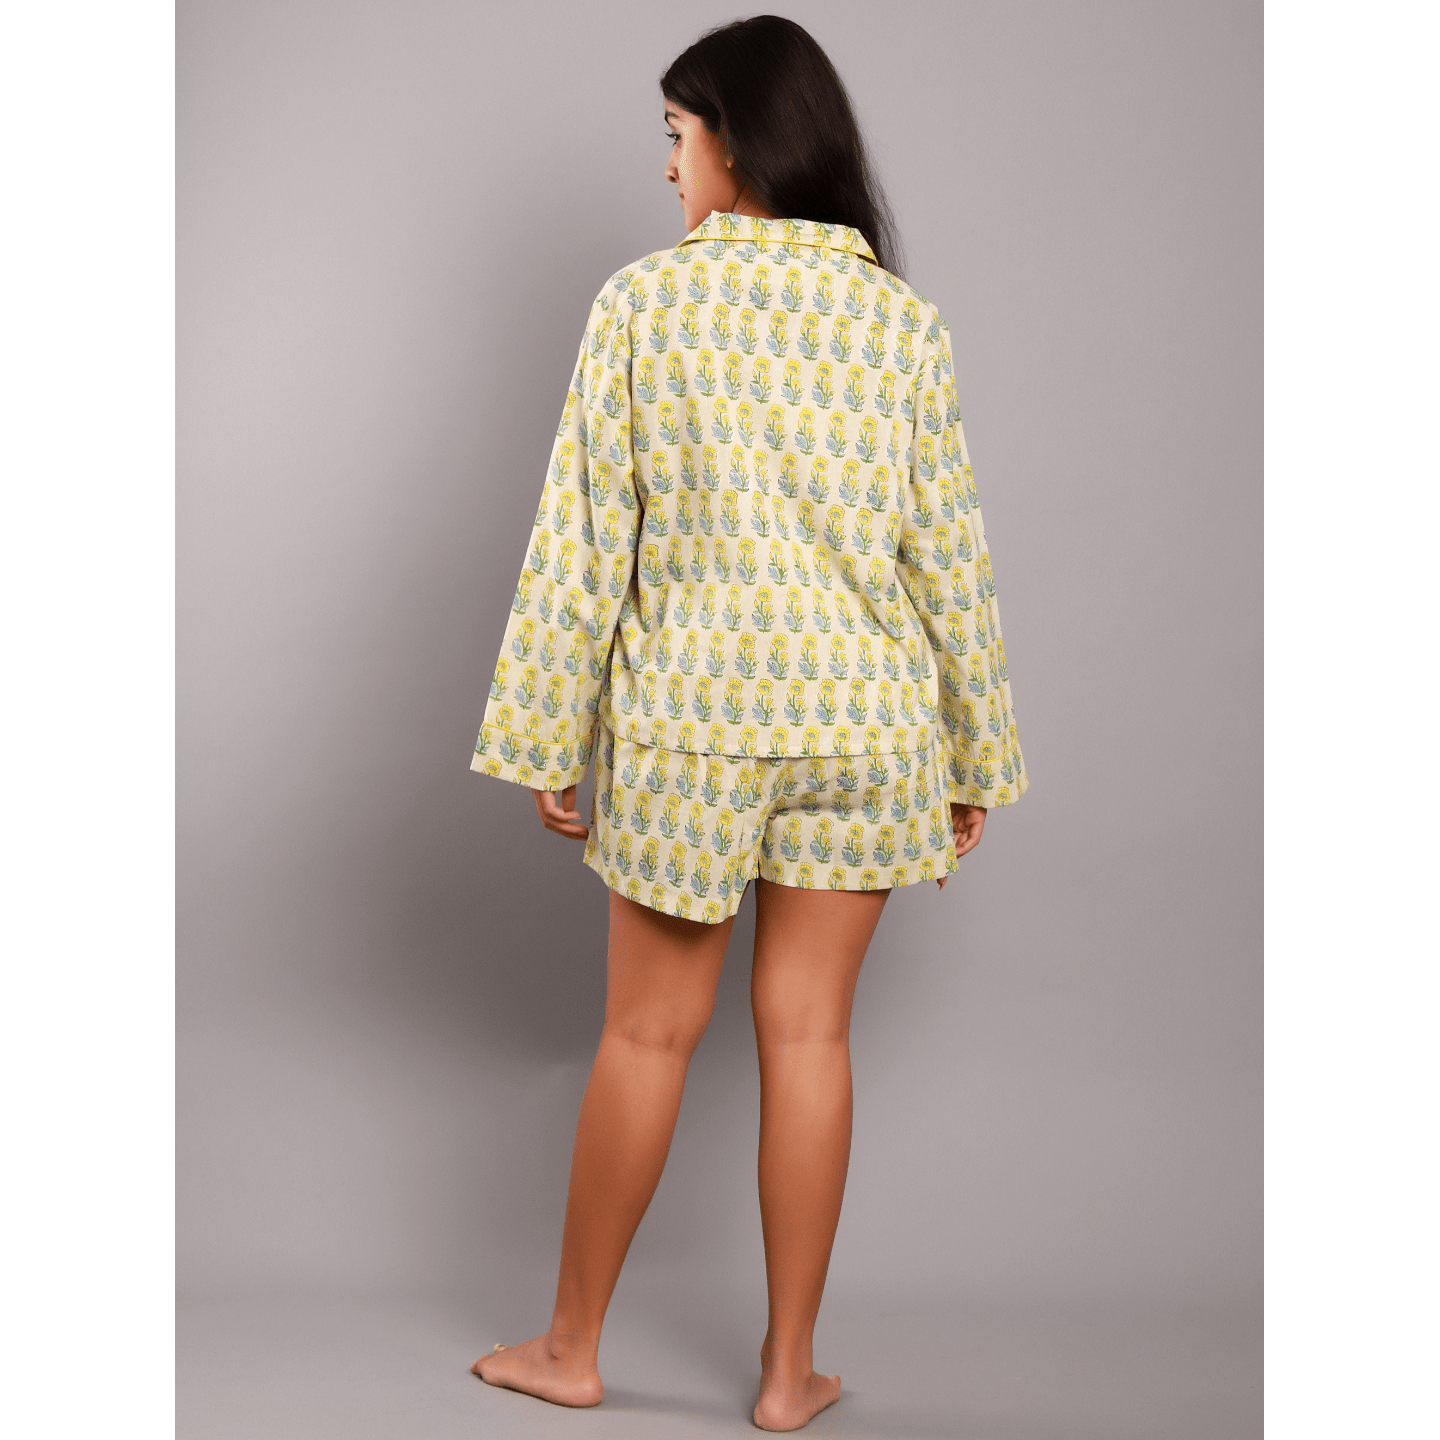 Women nightsuit ethnic buti beige- yellow block printed